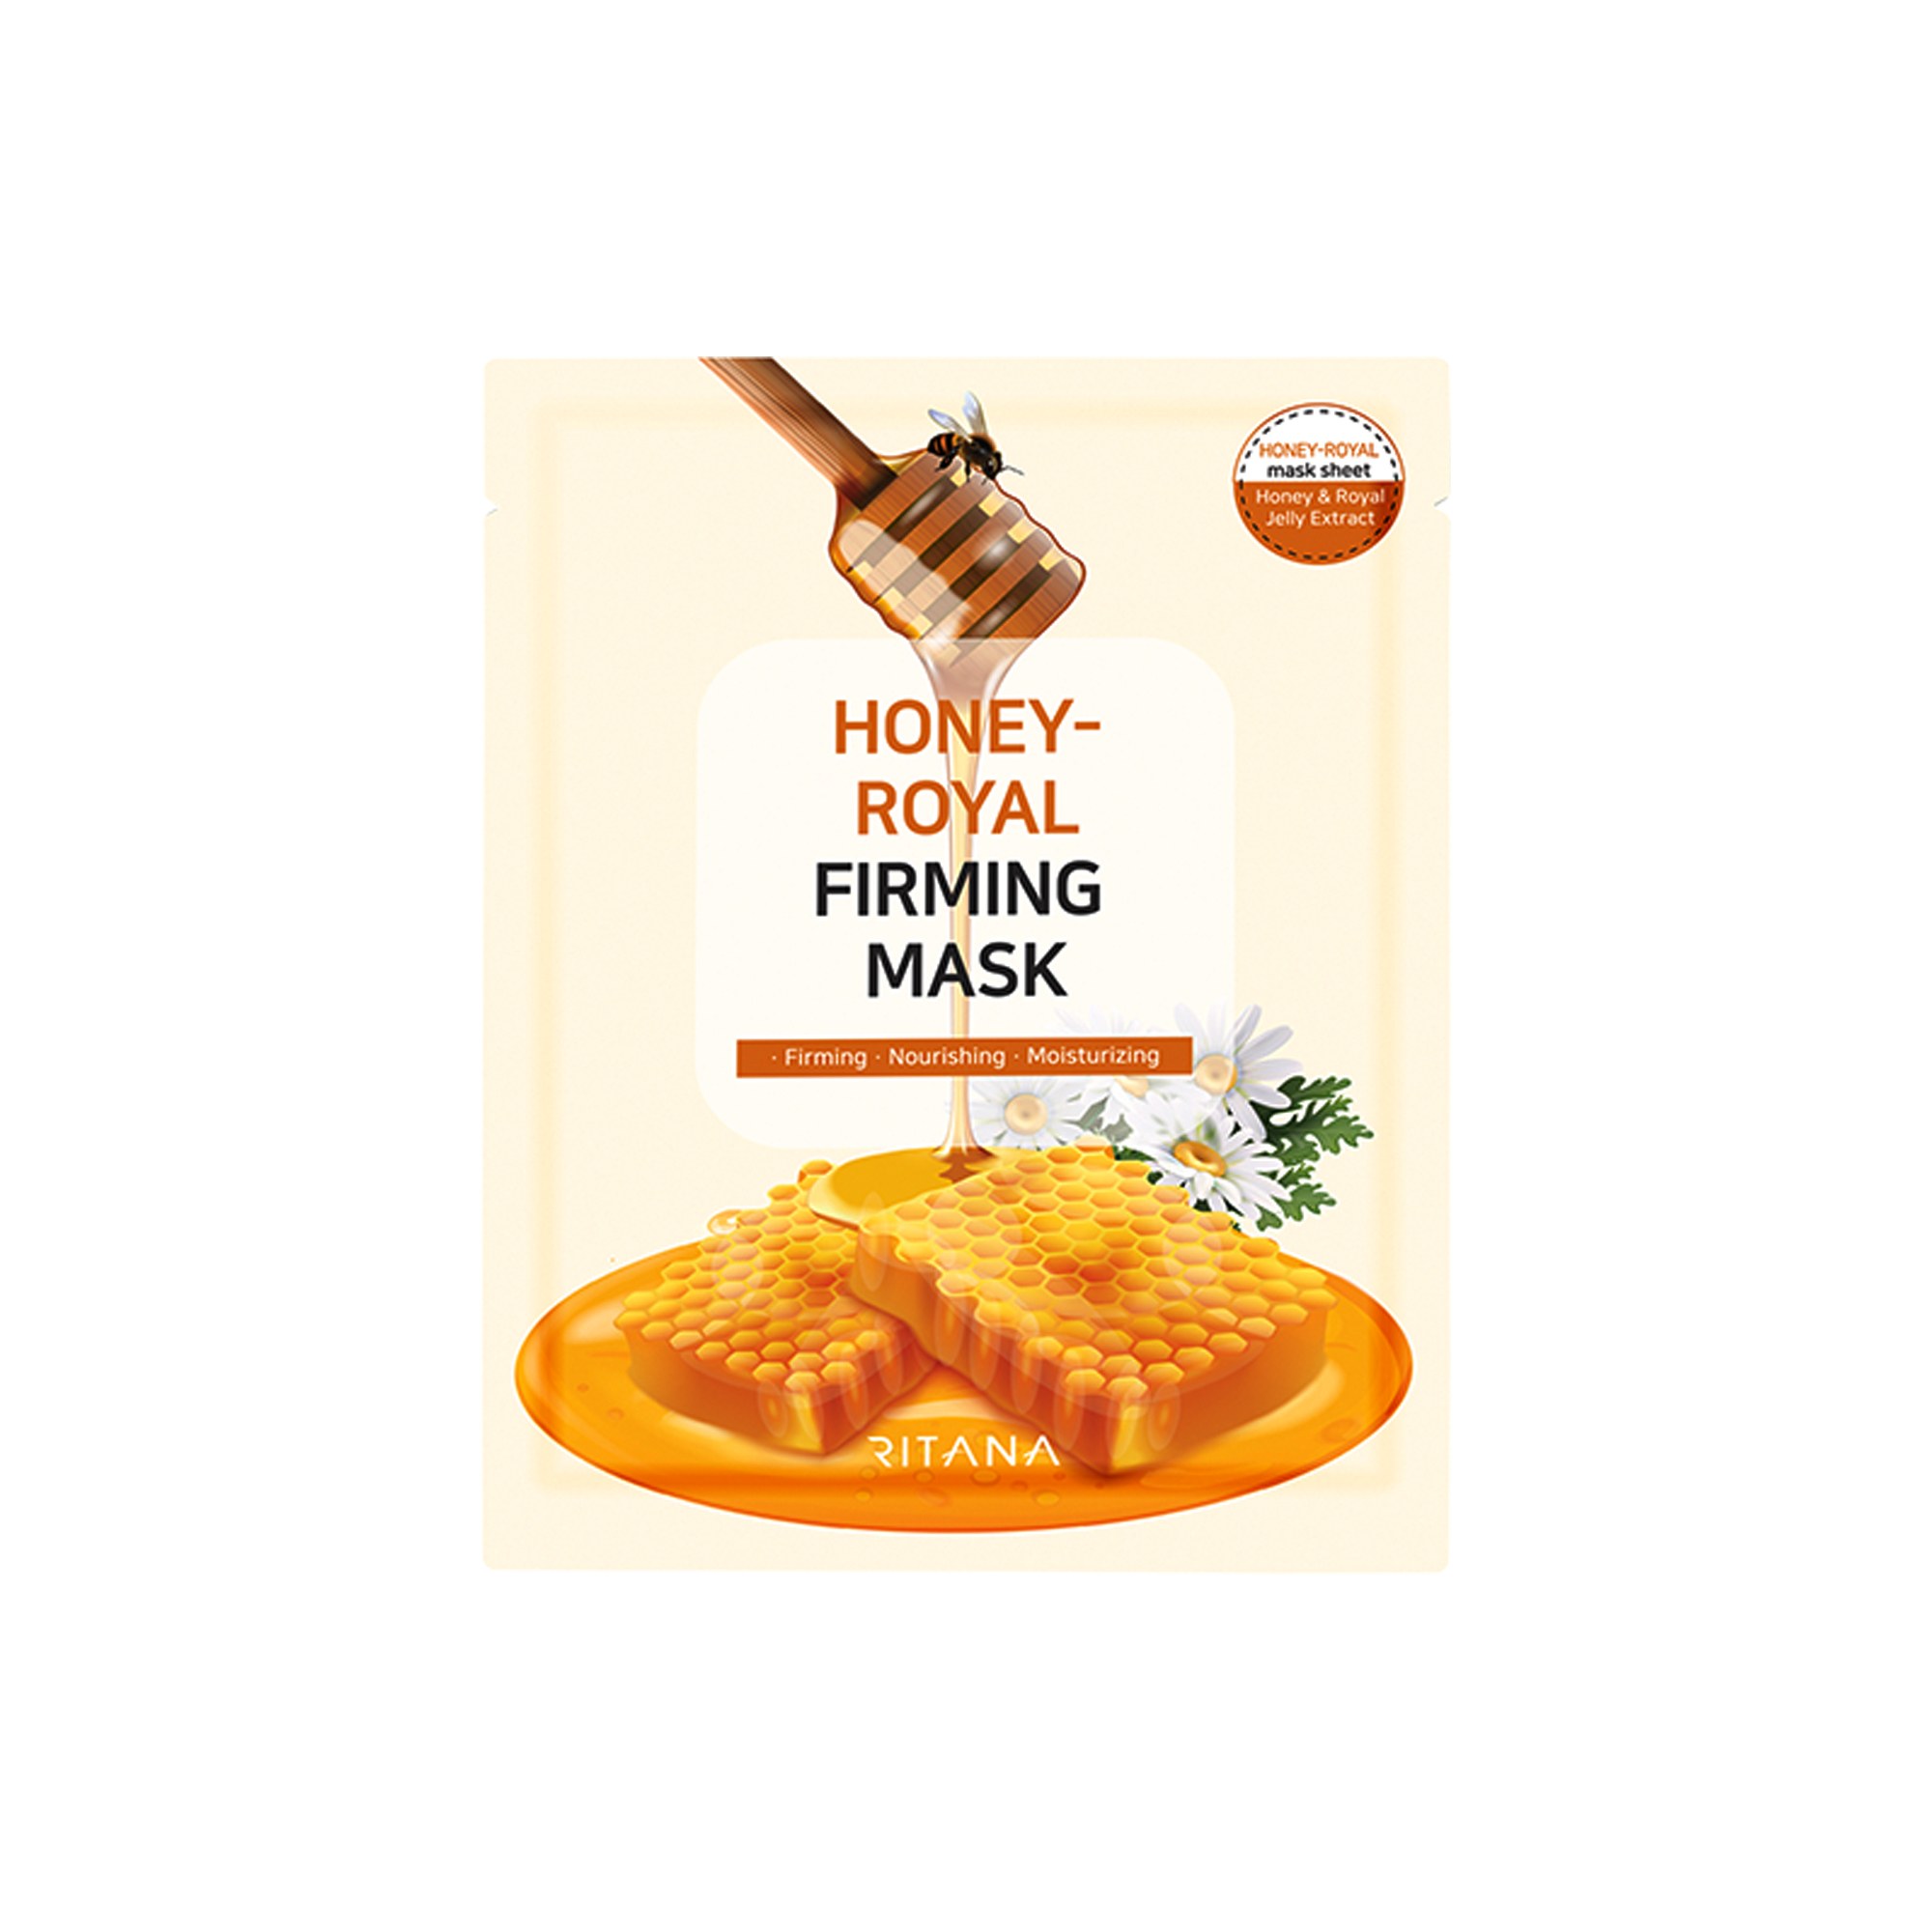 Ritana Honey-Royal Firming Mask 23ml